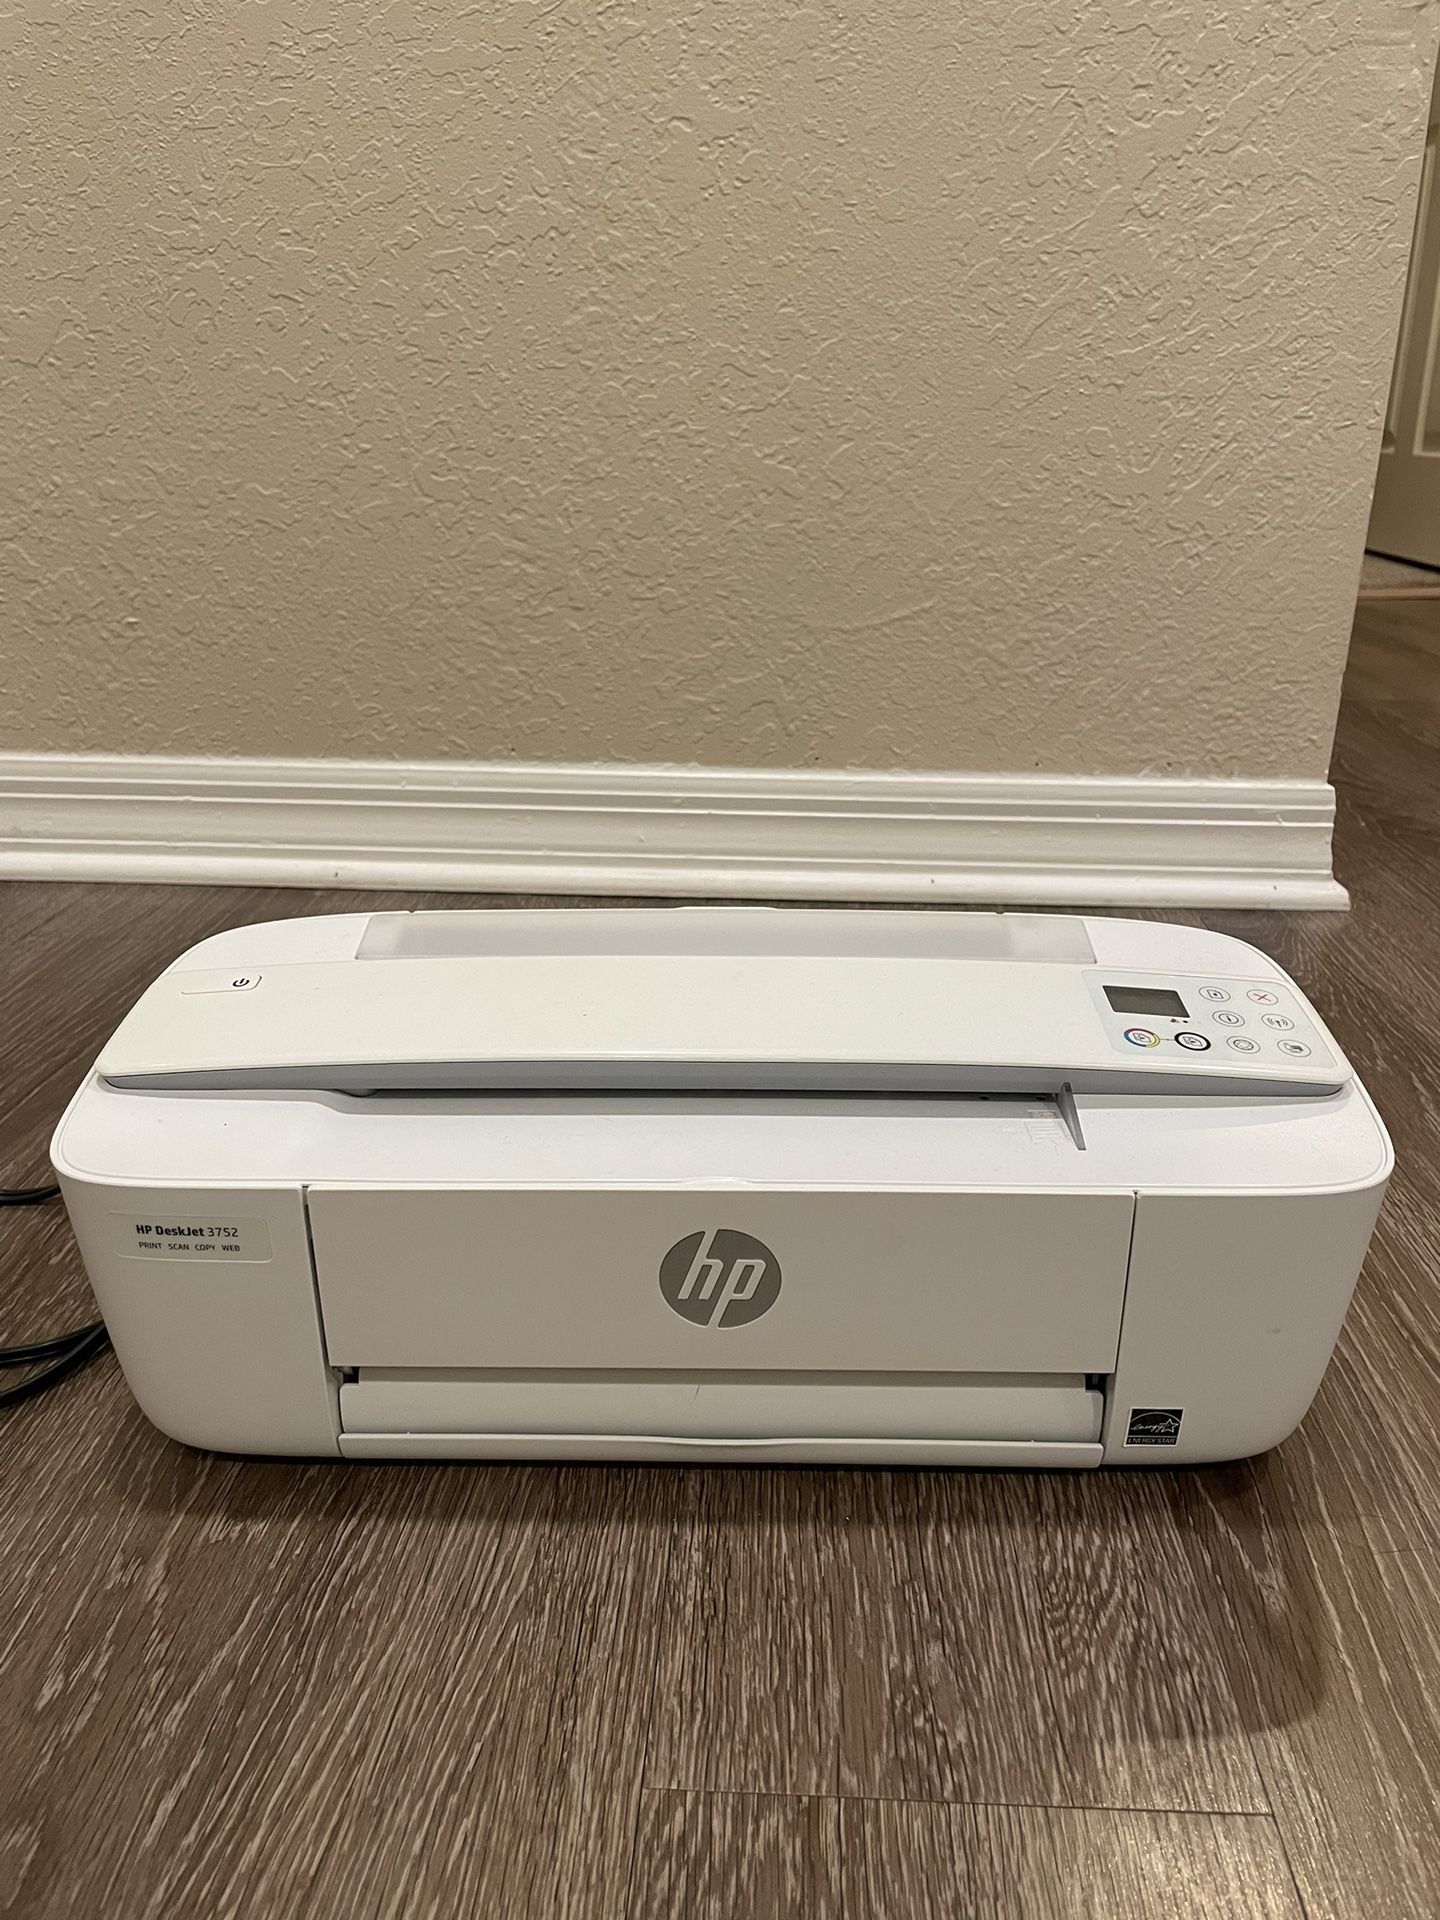 HP Compact Printer 